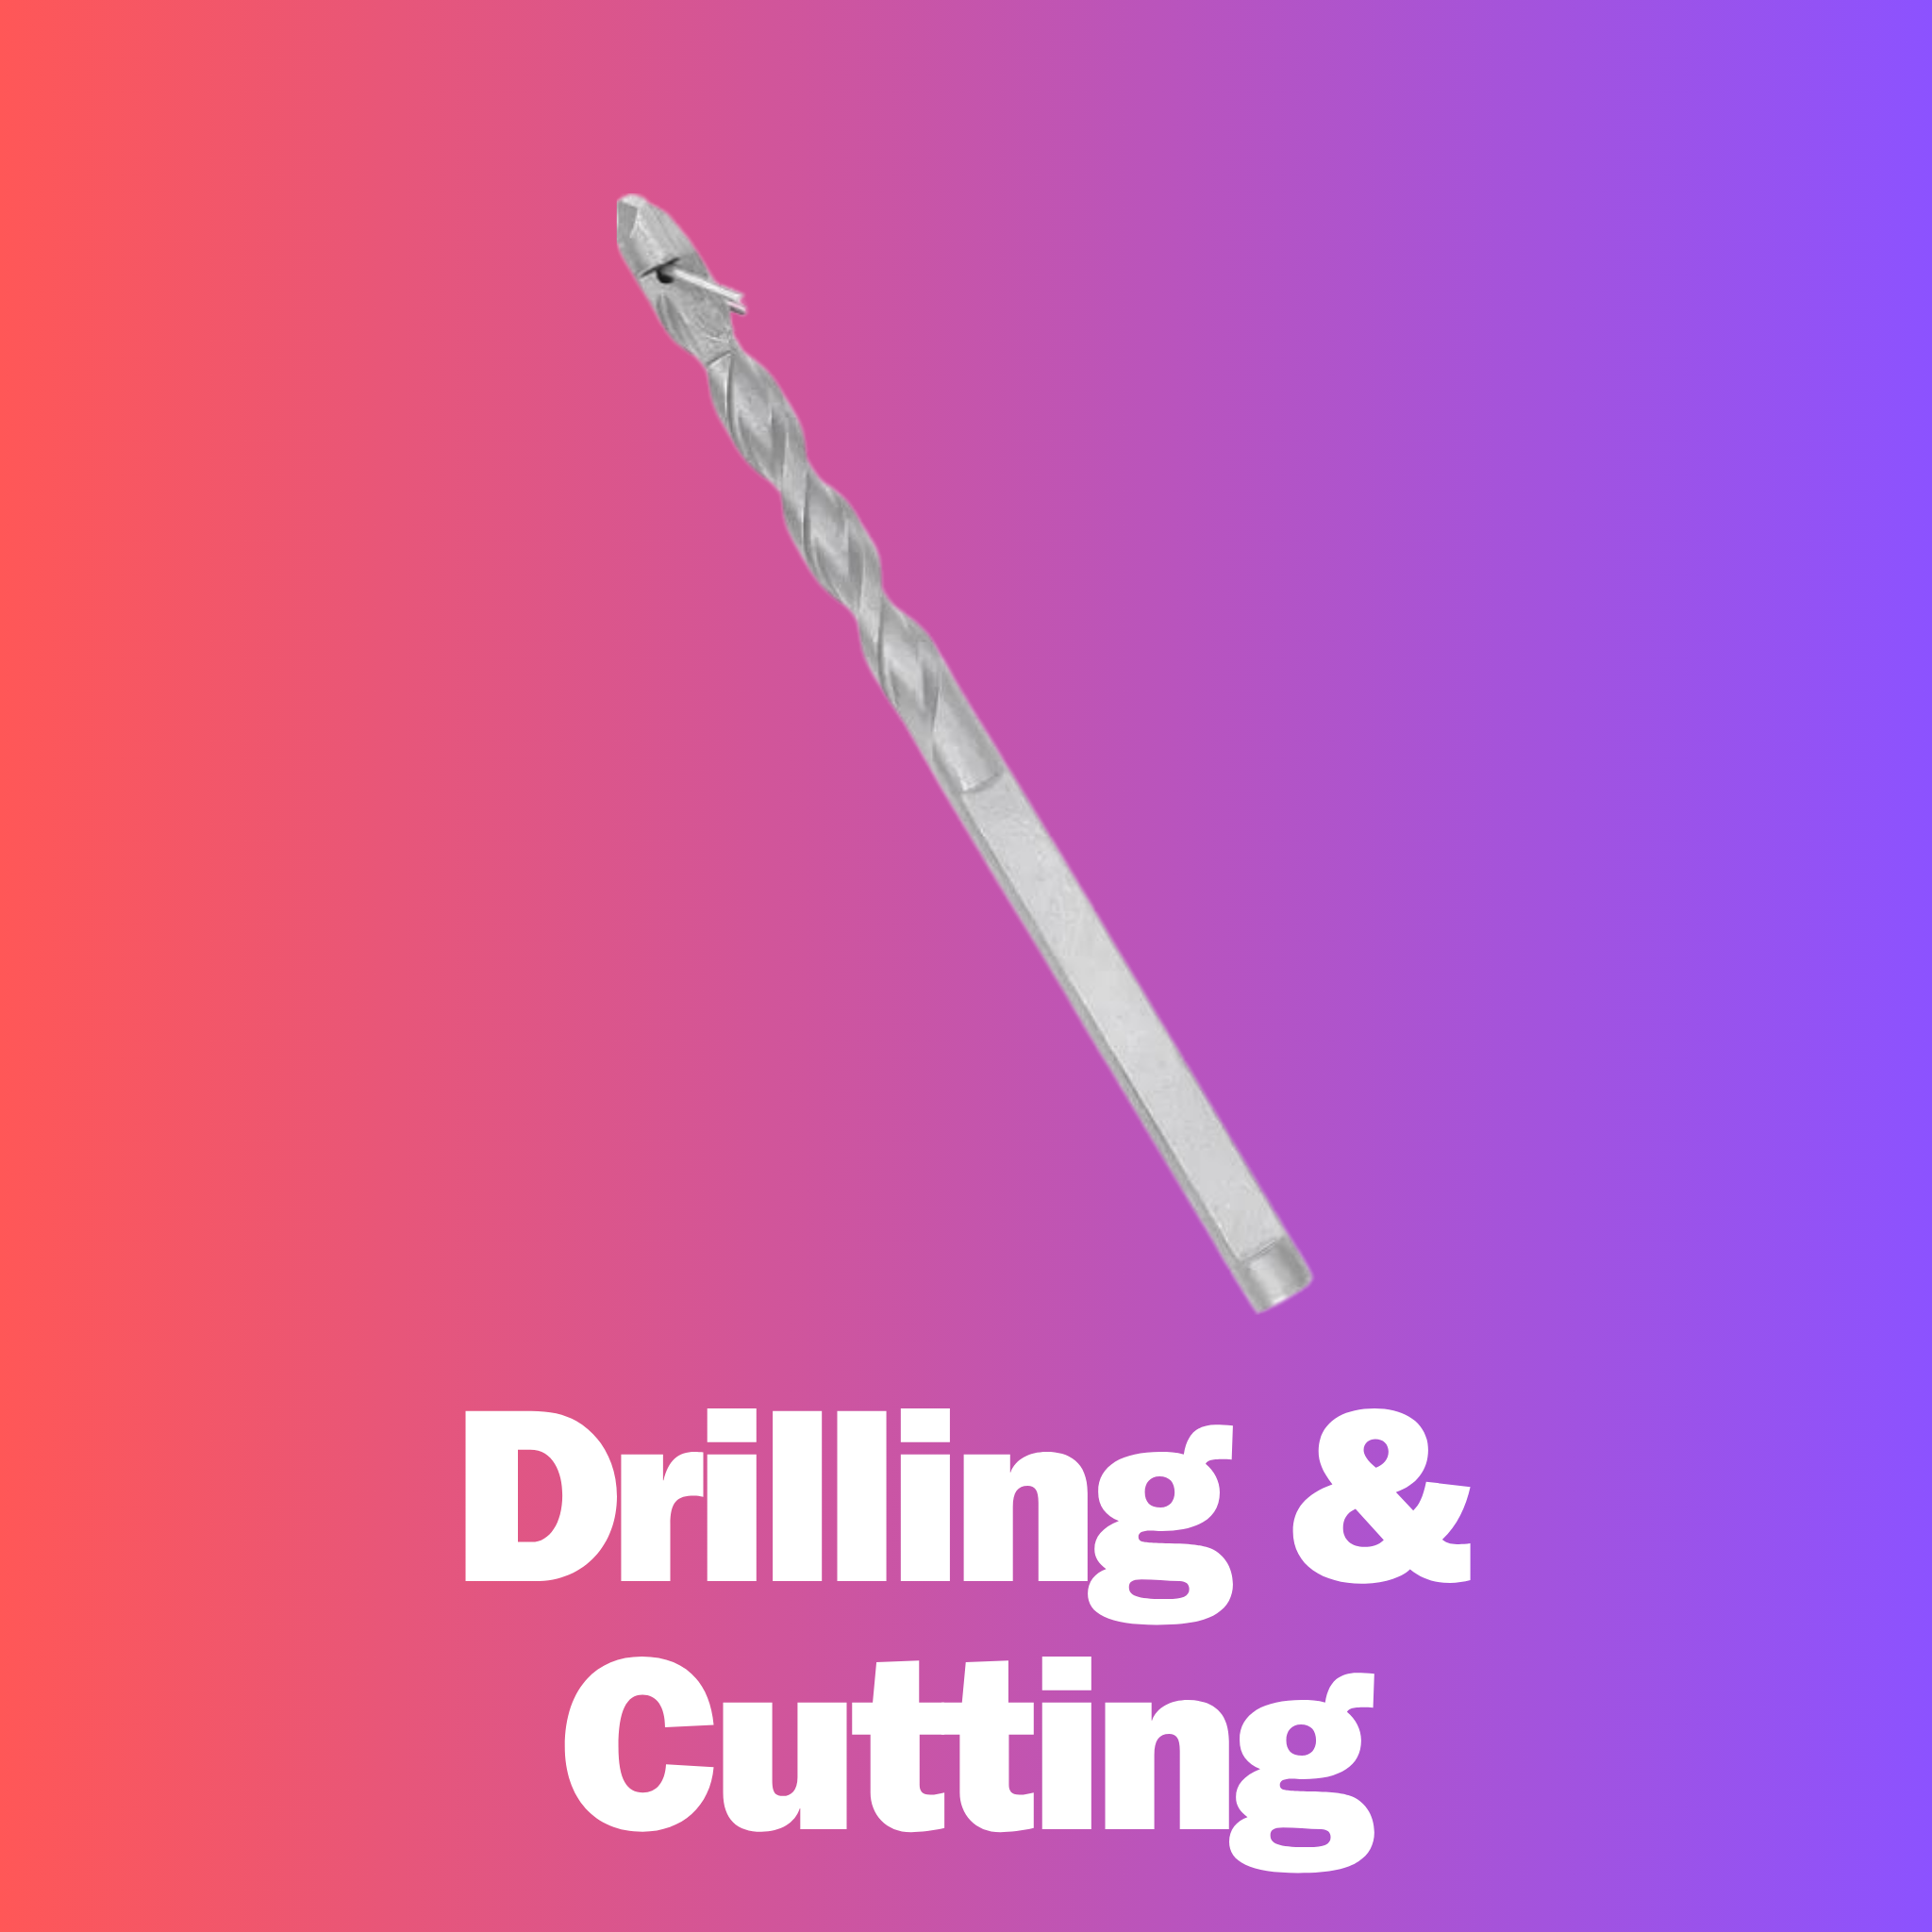 Drilling & Cutting